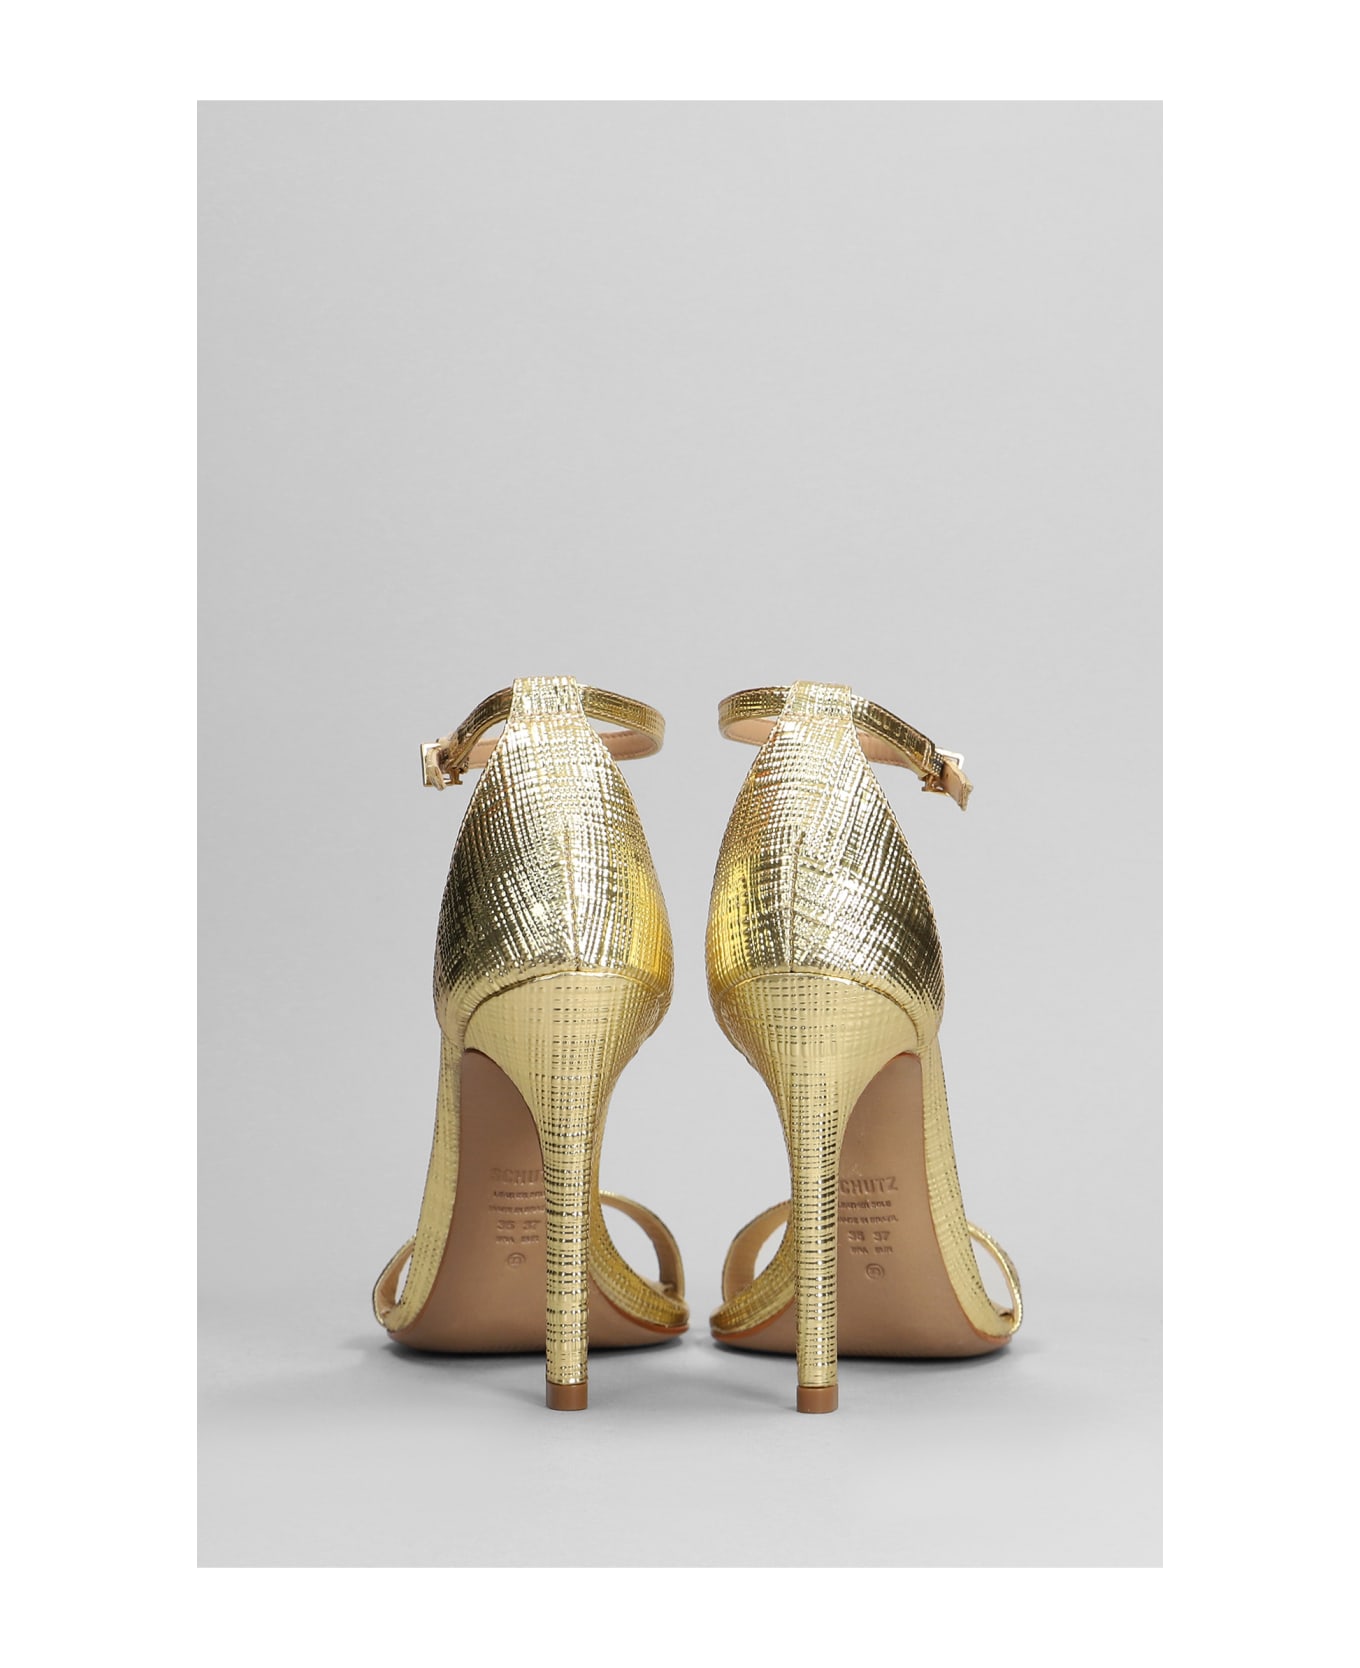 Schutz Sandals In Gold Leather - gold